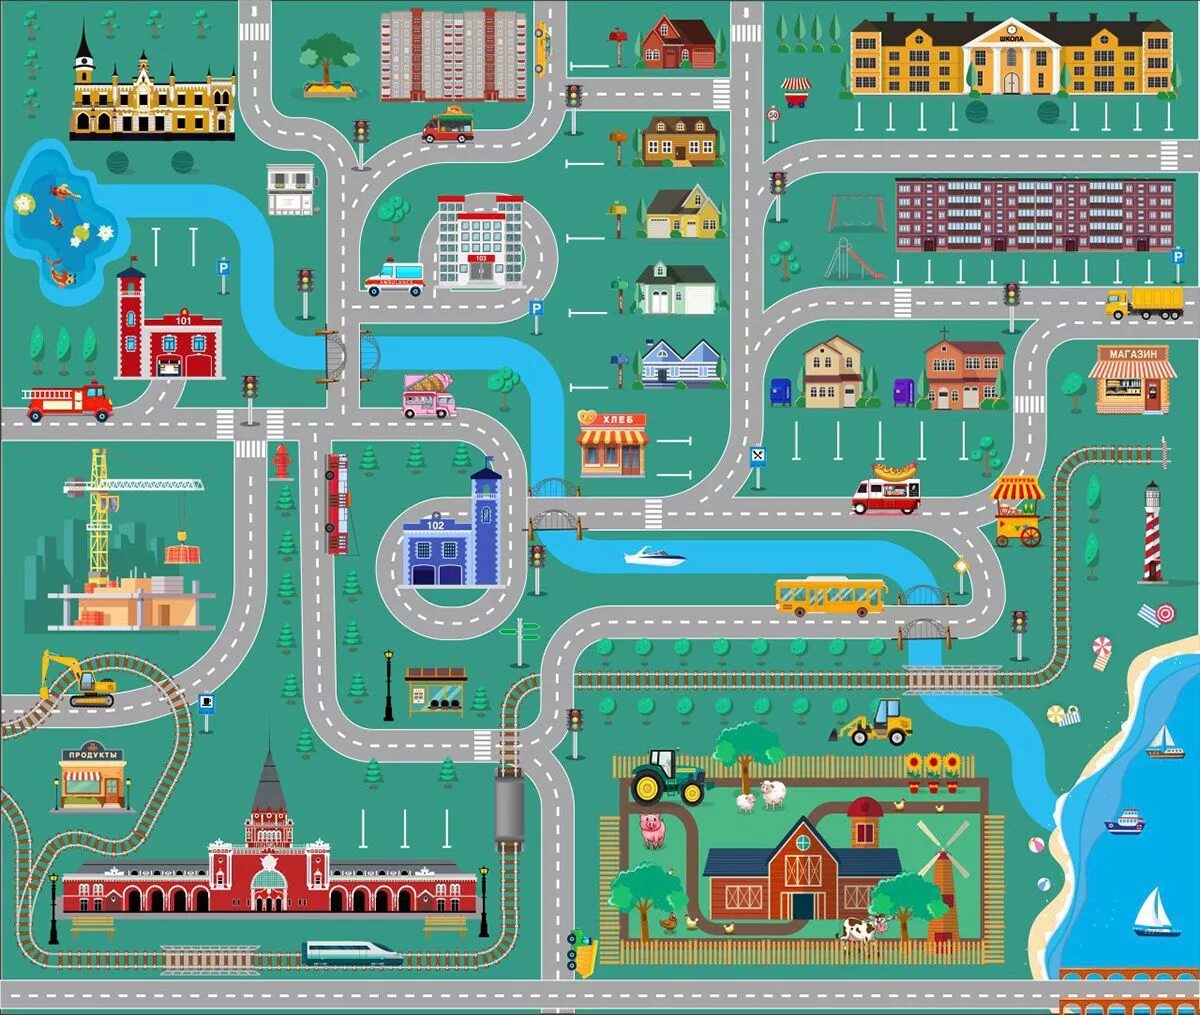 Let s the city. Карта города для детей. План города для детей. Карта города для игры. План города для игры.